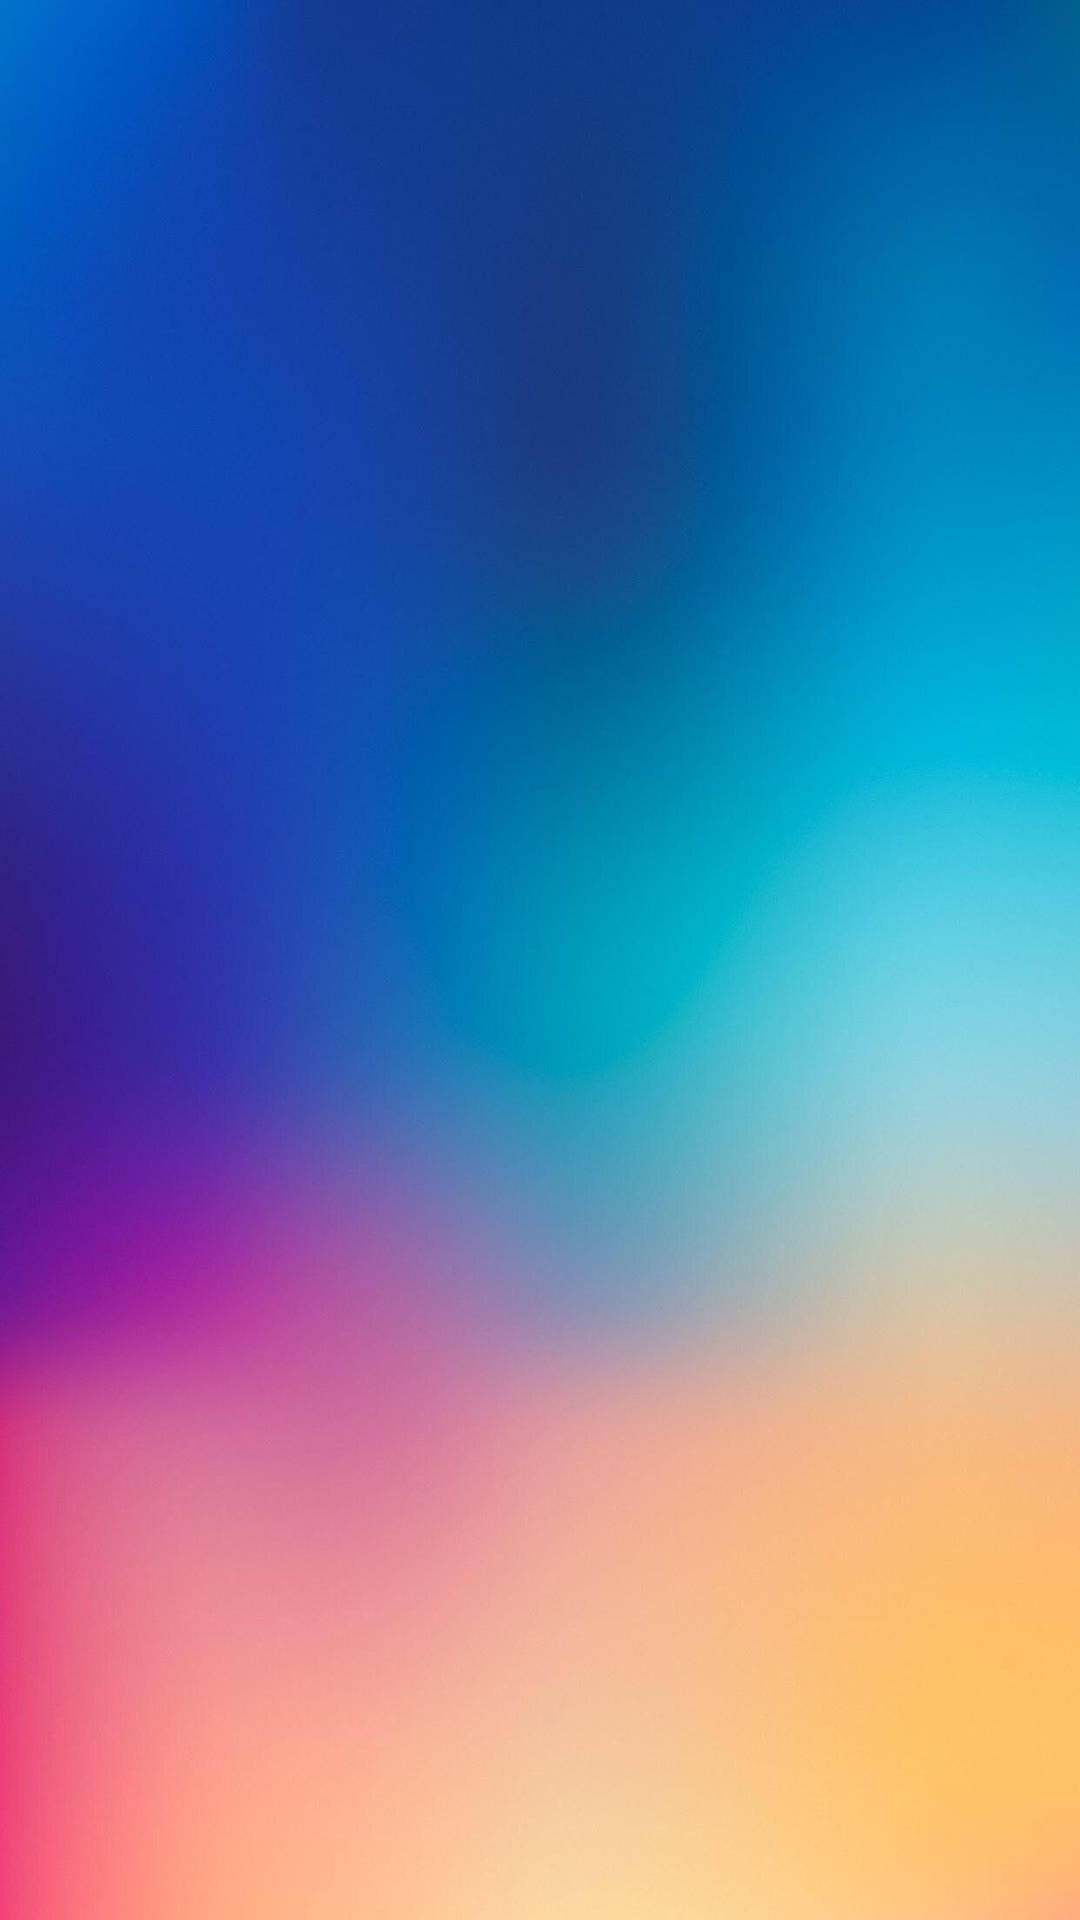 Plain Blue Orange Blur Gradient Iphone Background